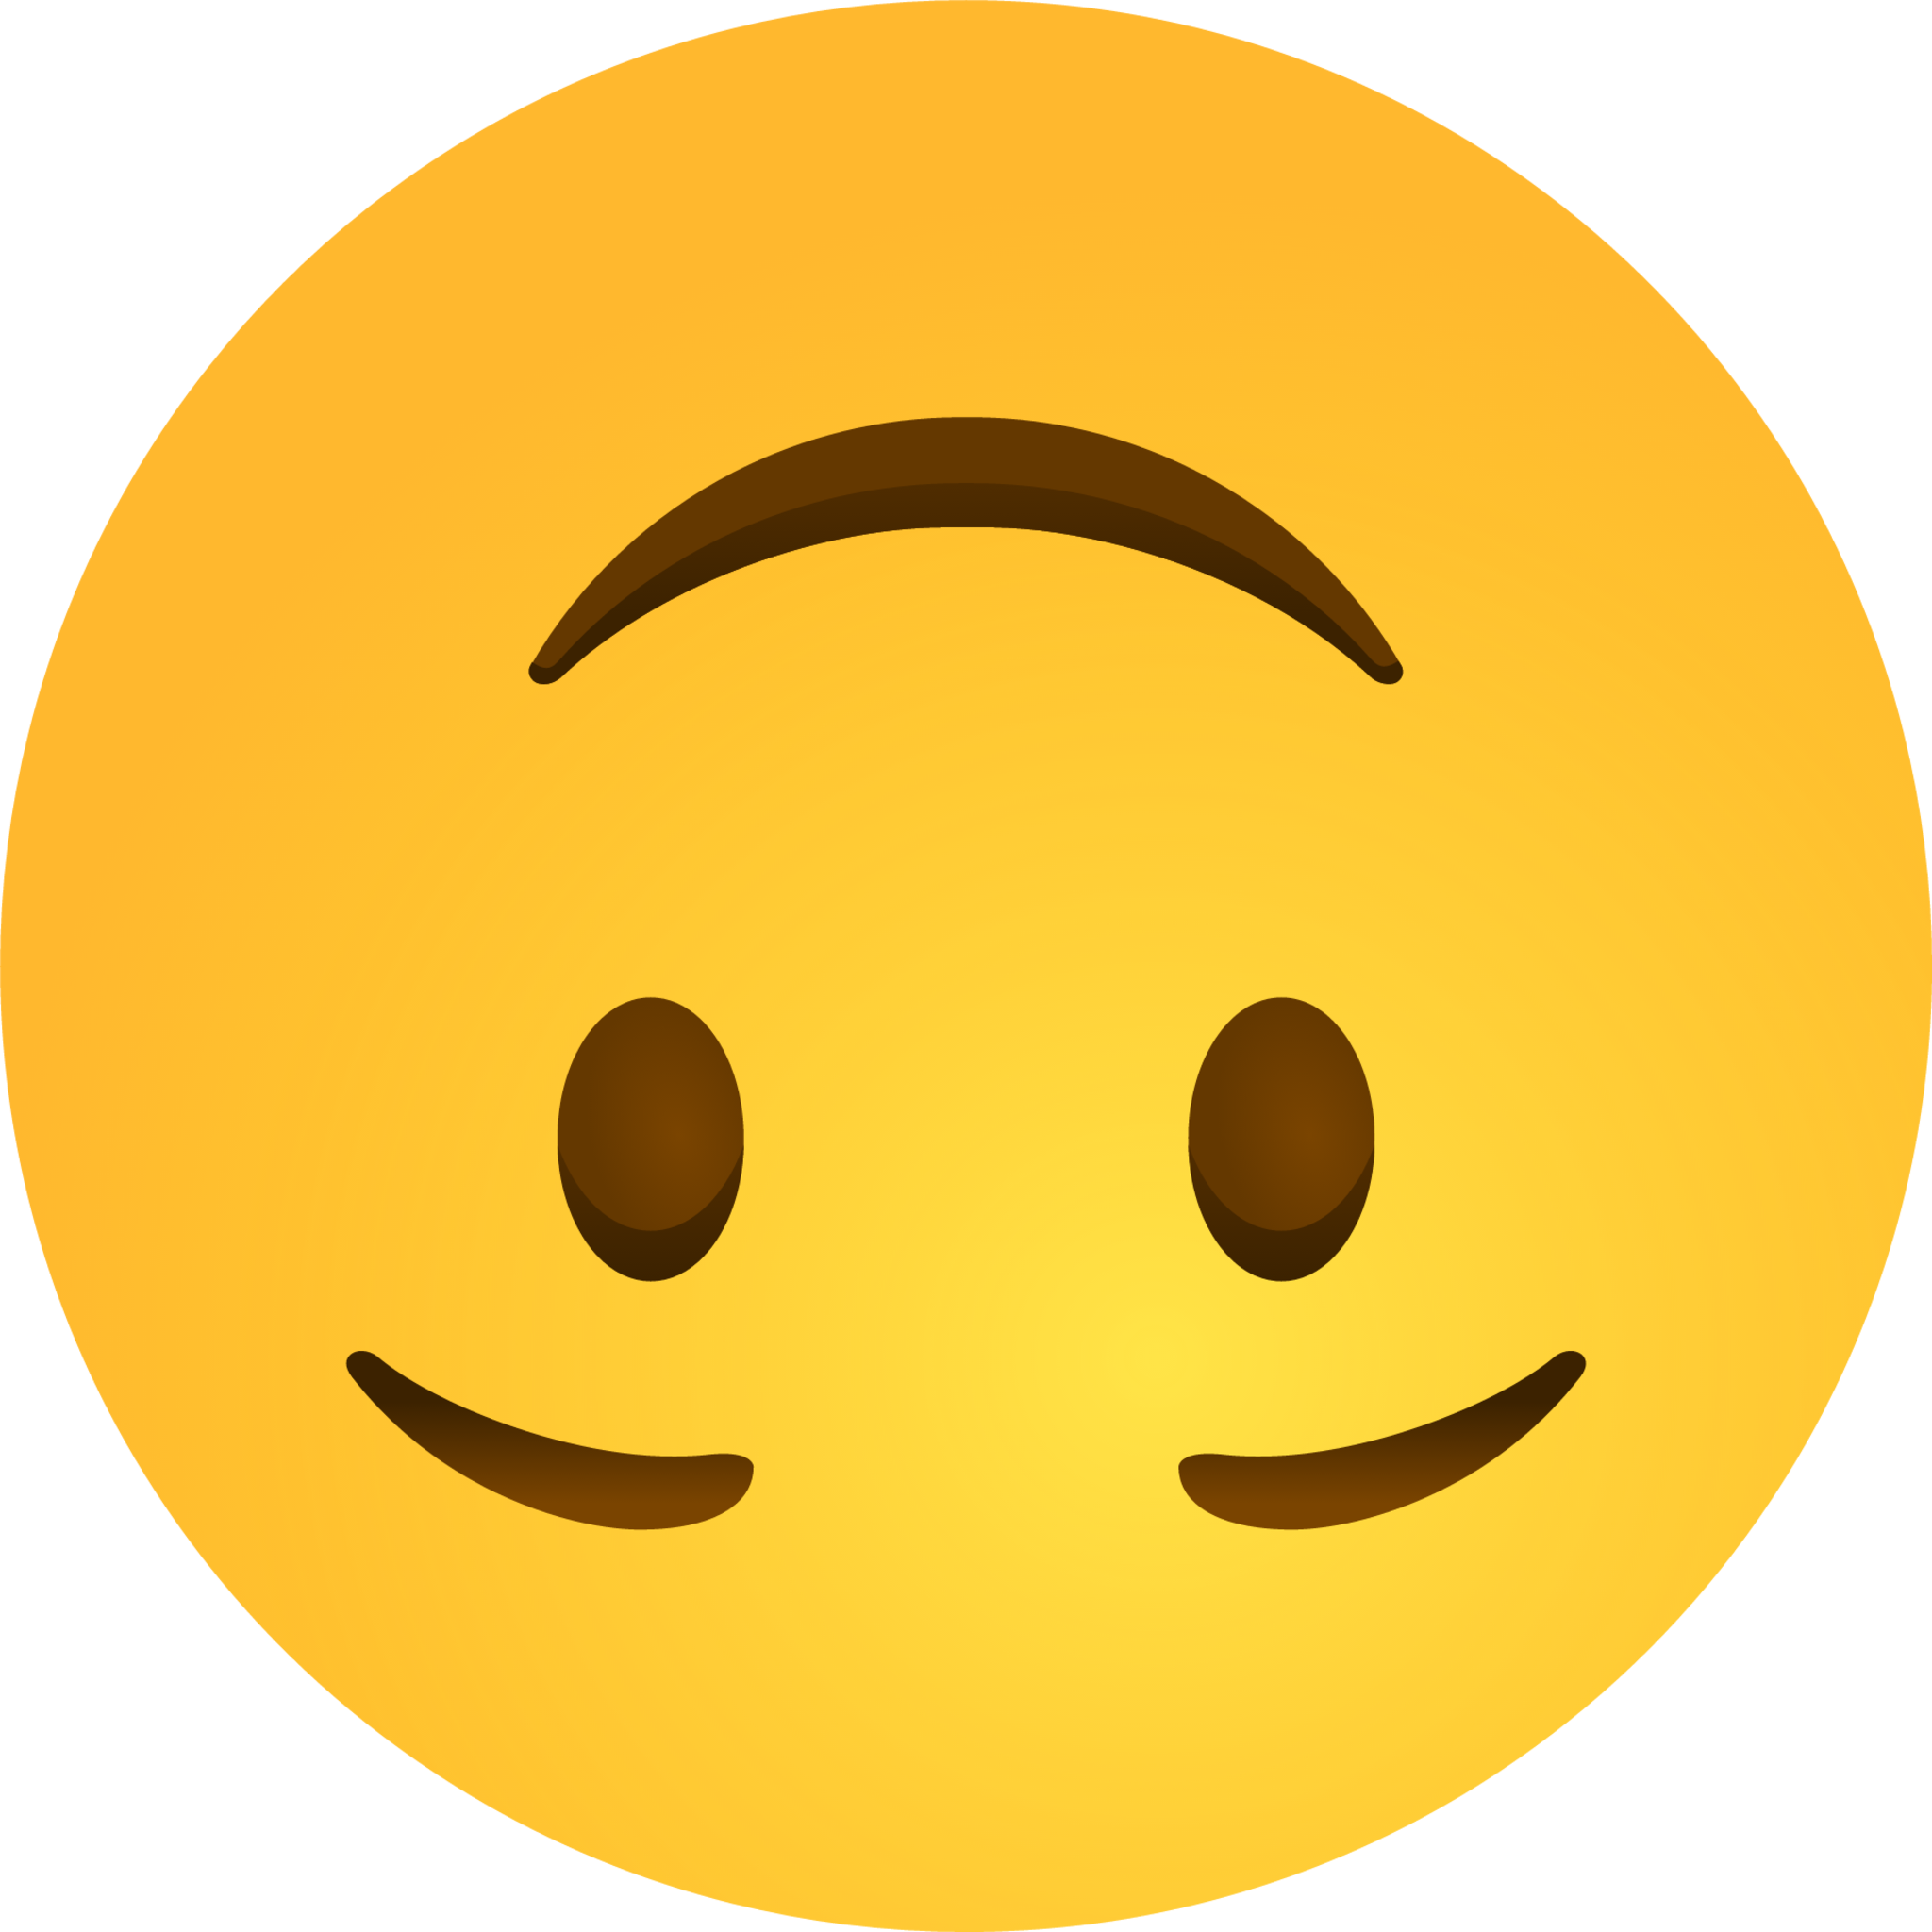 Upside down face emoji emoji